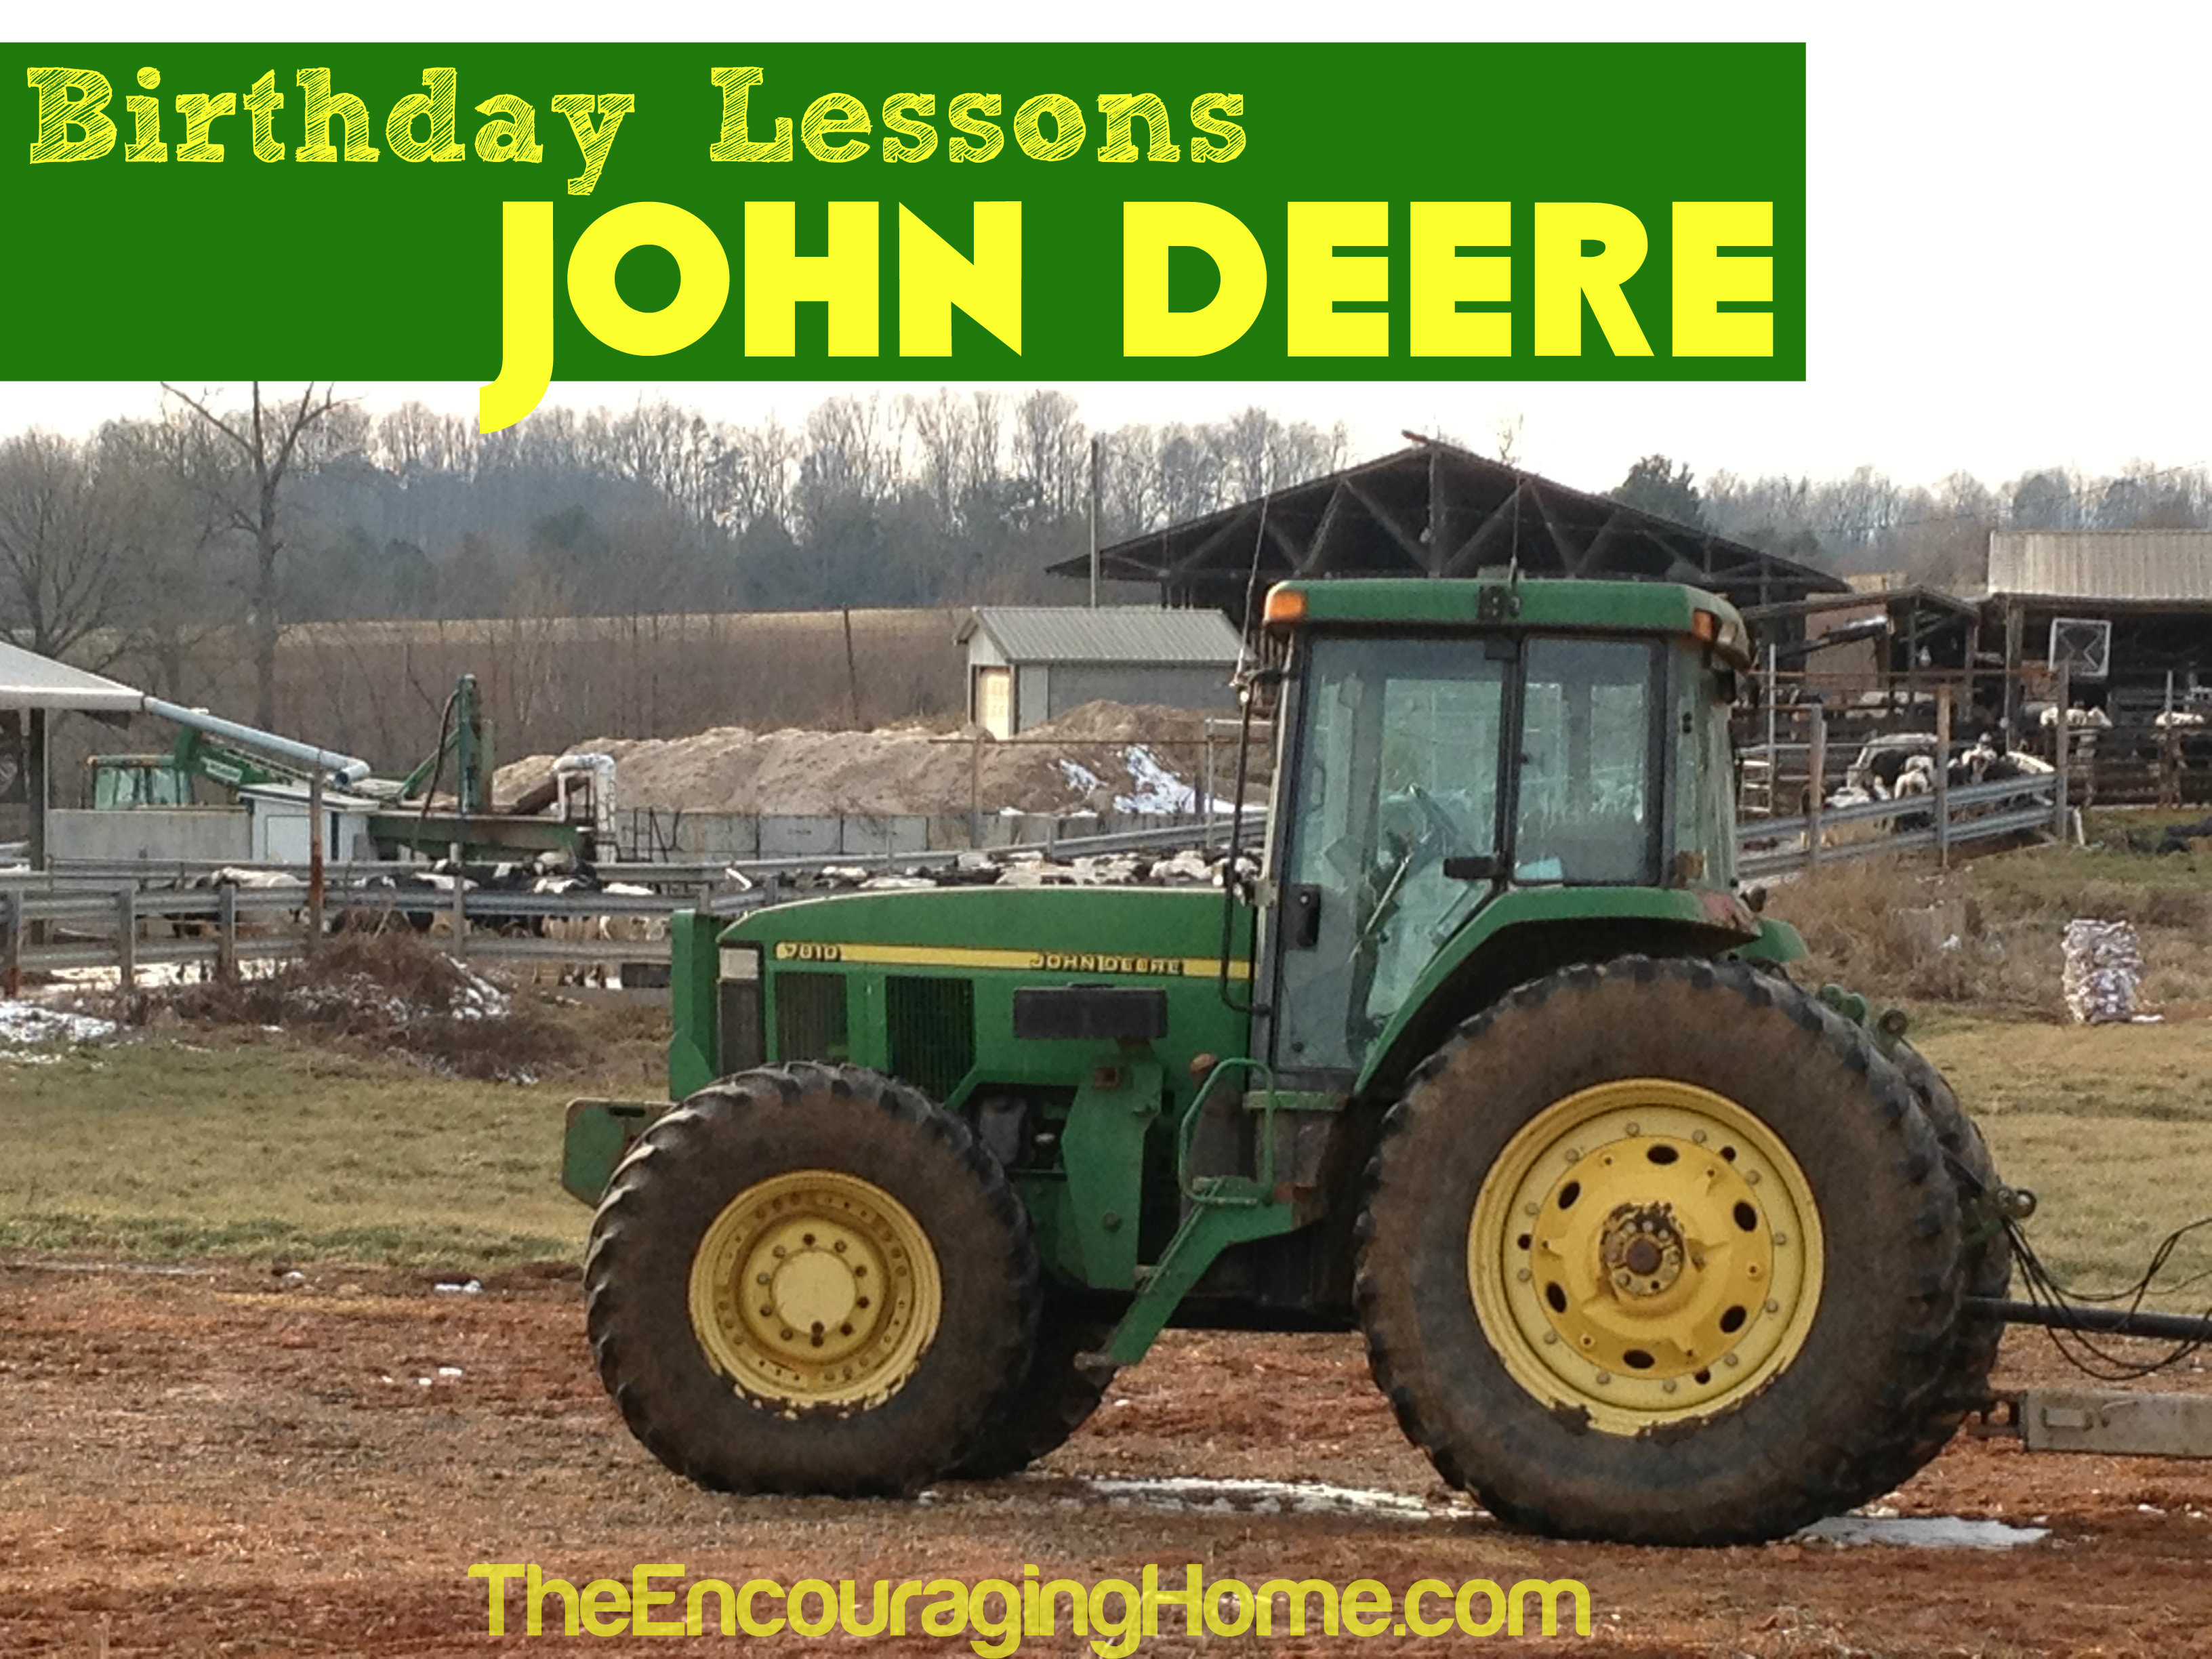 John Deere: Birthday Lessons